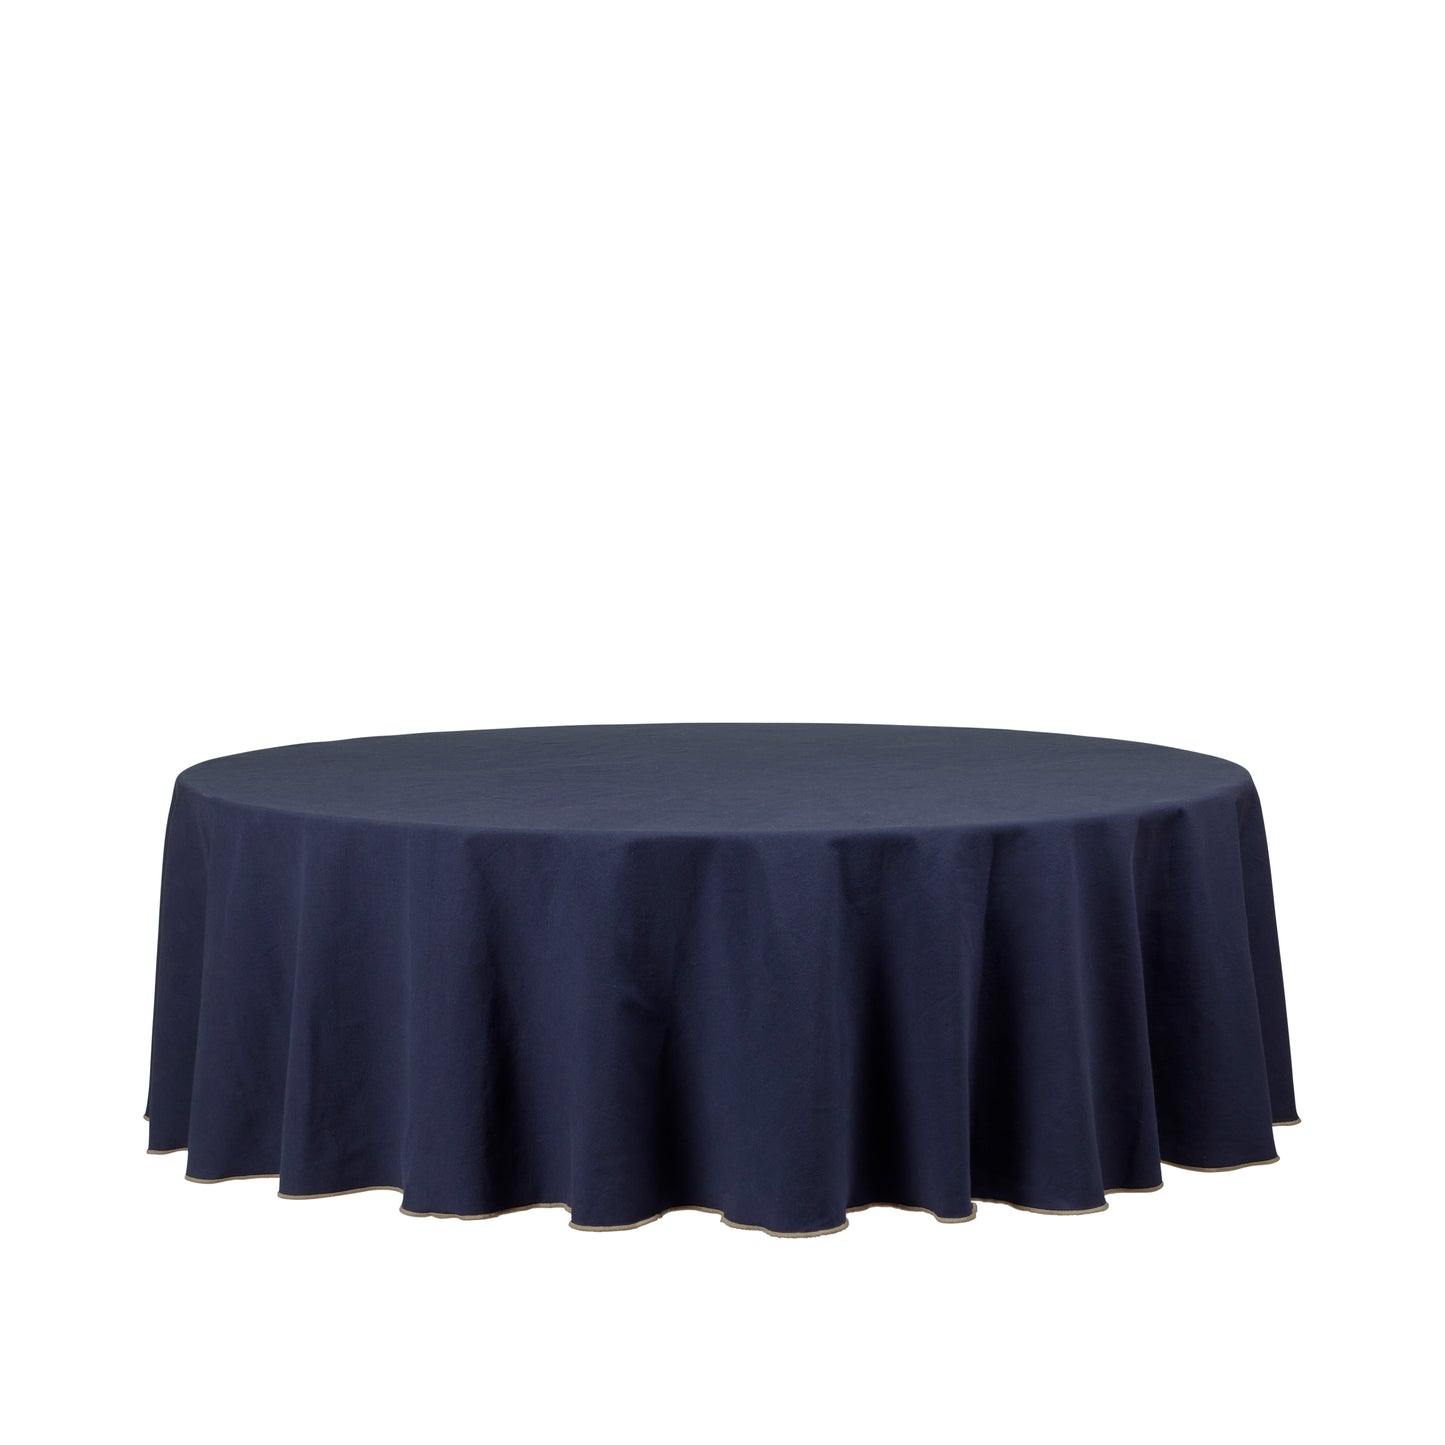 Broste Copenhagen Wilhelmina Tablecloth in Maritime Blue